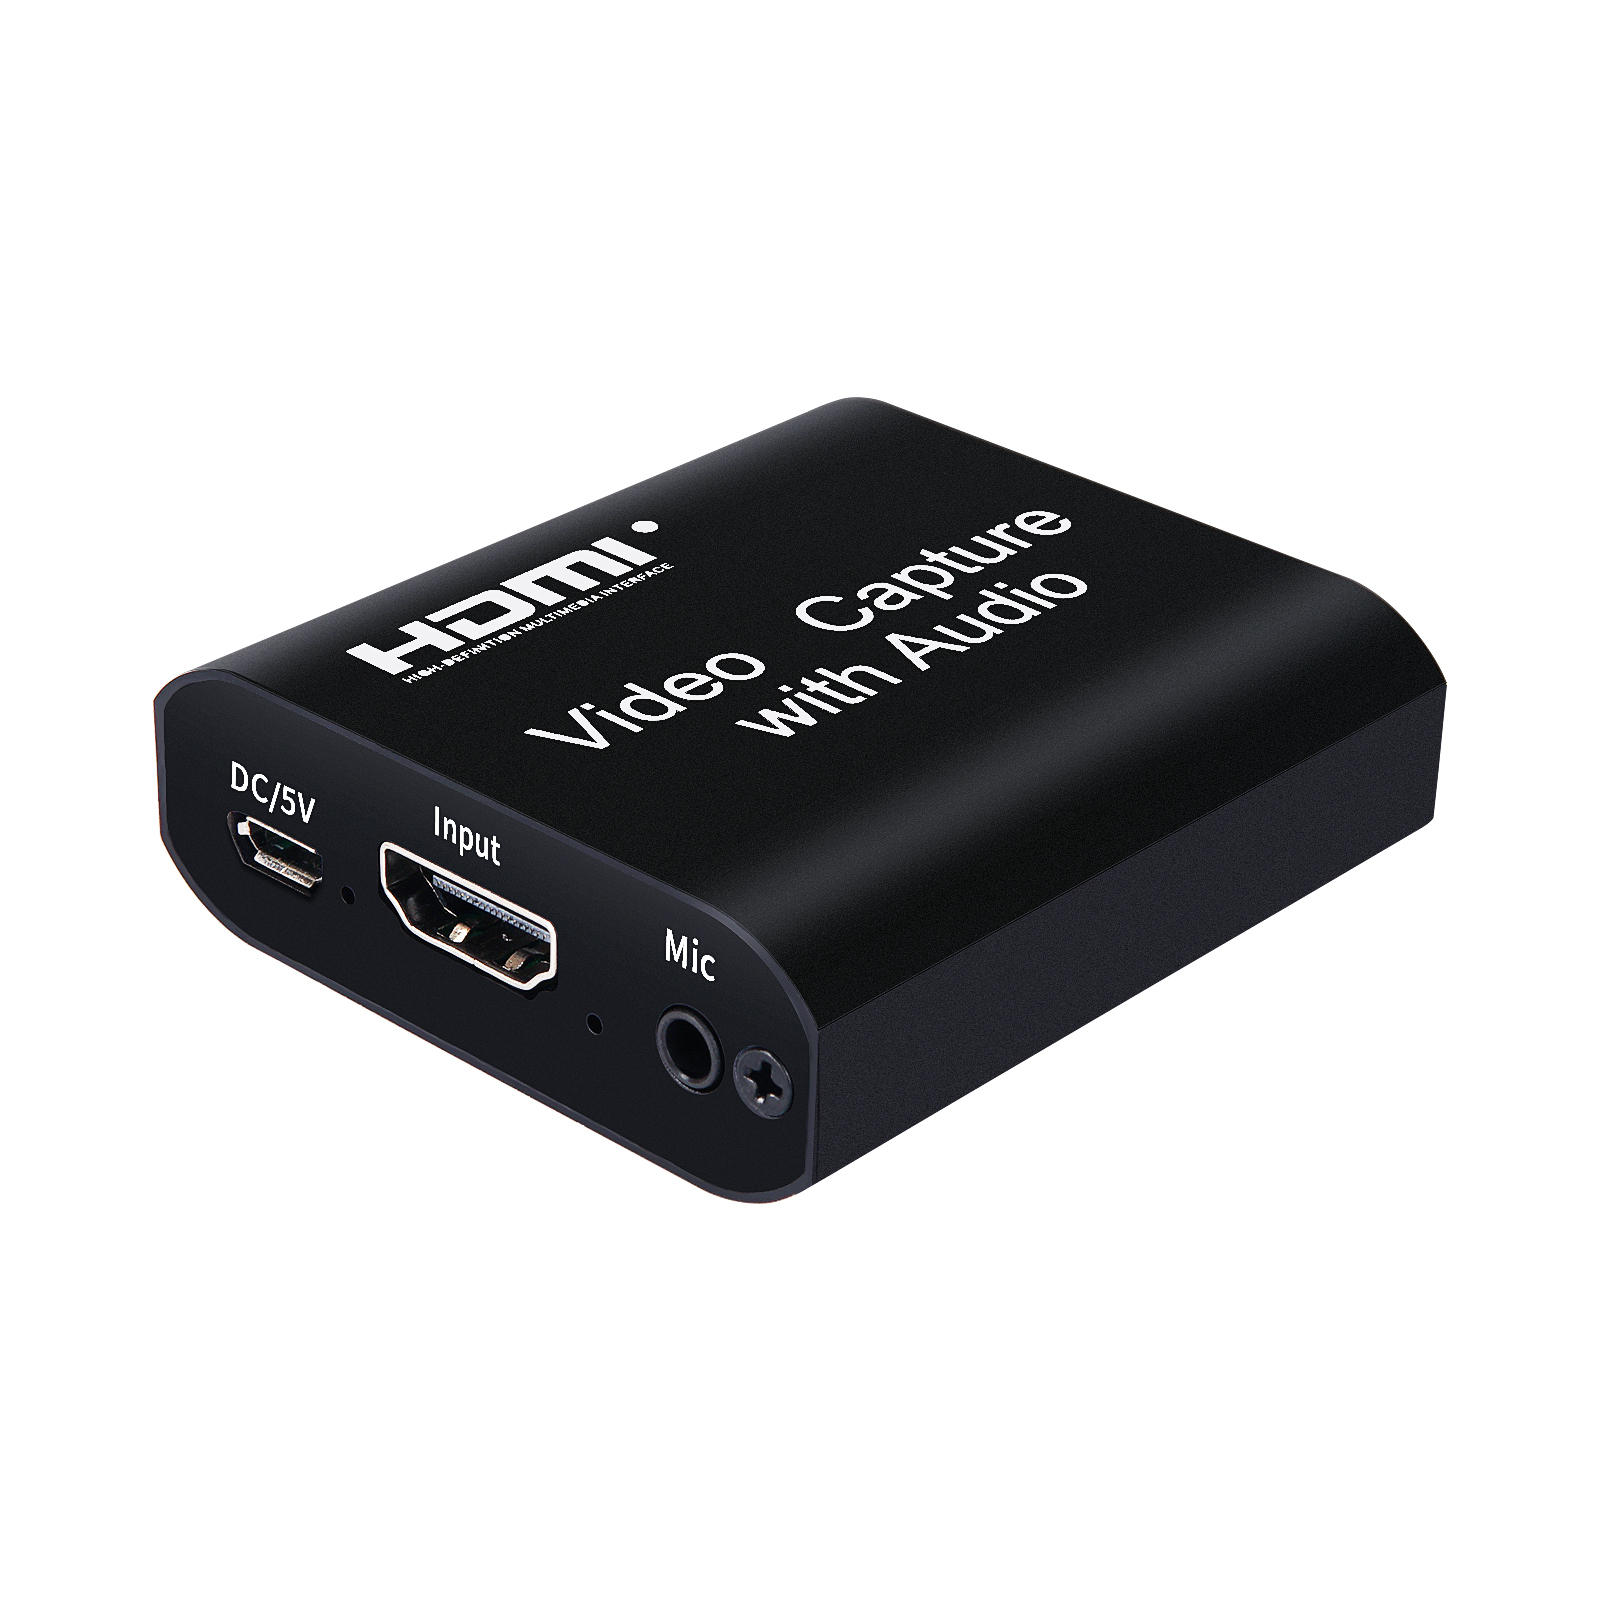 Lengtegraad Leesbaarheid lamp Andycine AC-U2H42 HDMI to USB Capture Card 4K 30HZ USB 2.0 Record via DSLR  Camcorder Action Cam with Mic and Audio